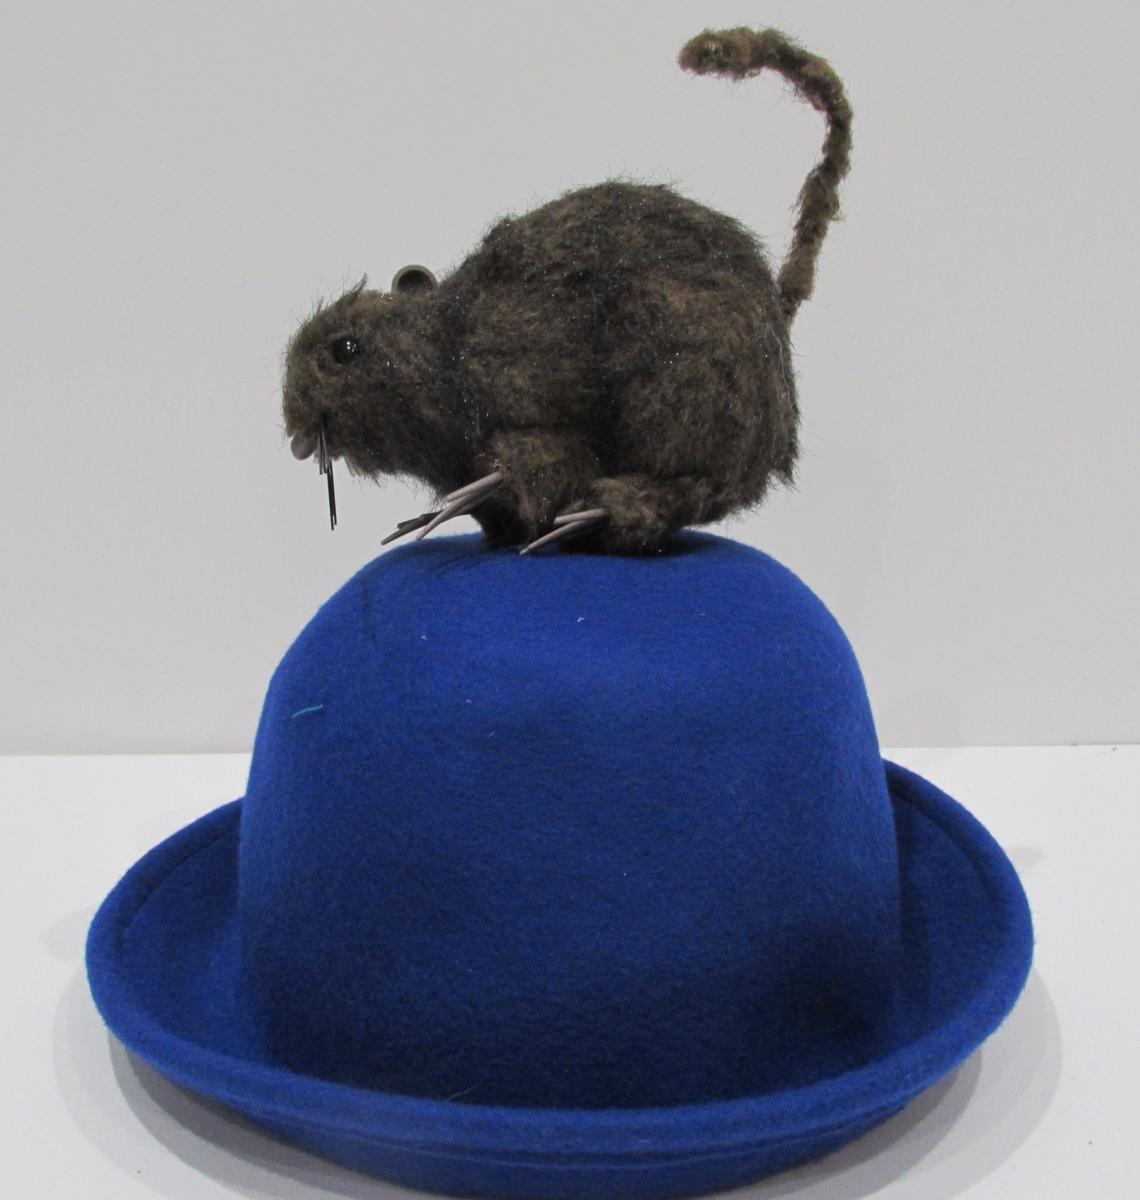 Rat on hat